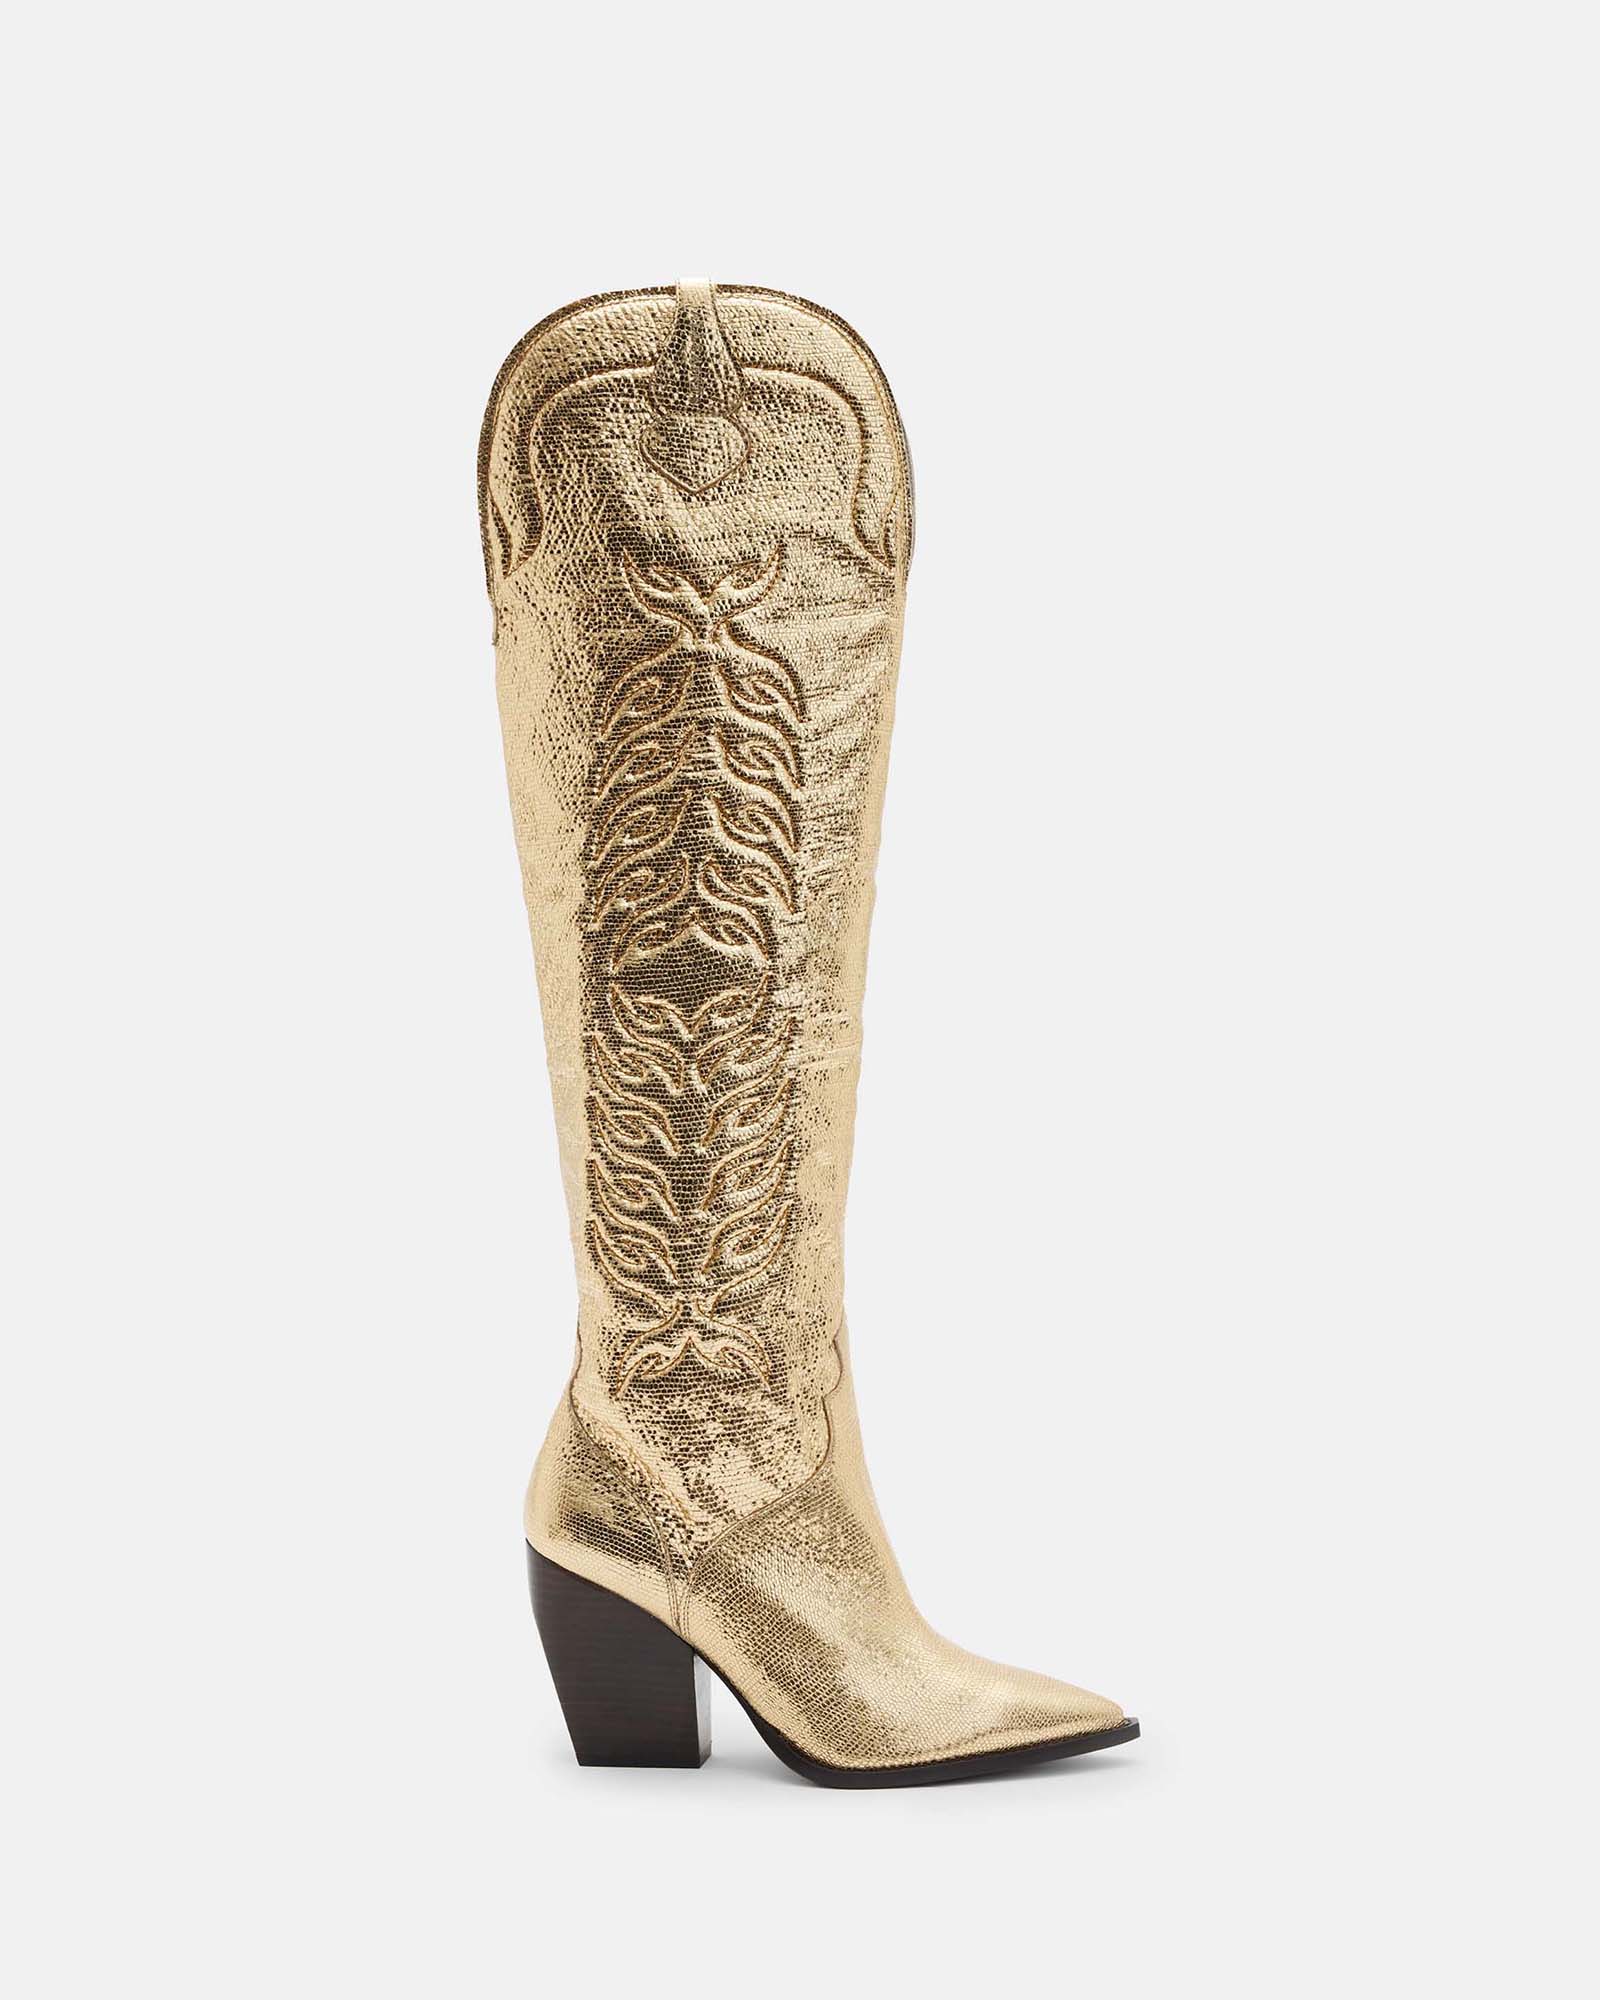 AllSaints Roxanne Knee High Metallic Leather Boots,, METALLIC GOLD